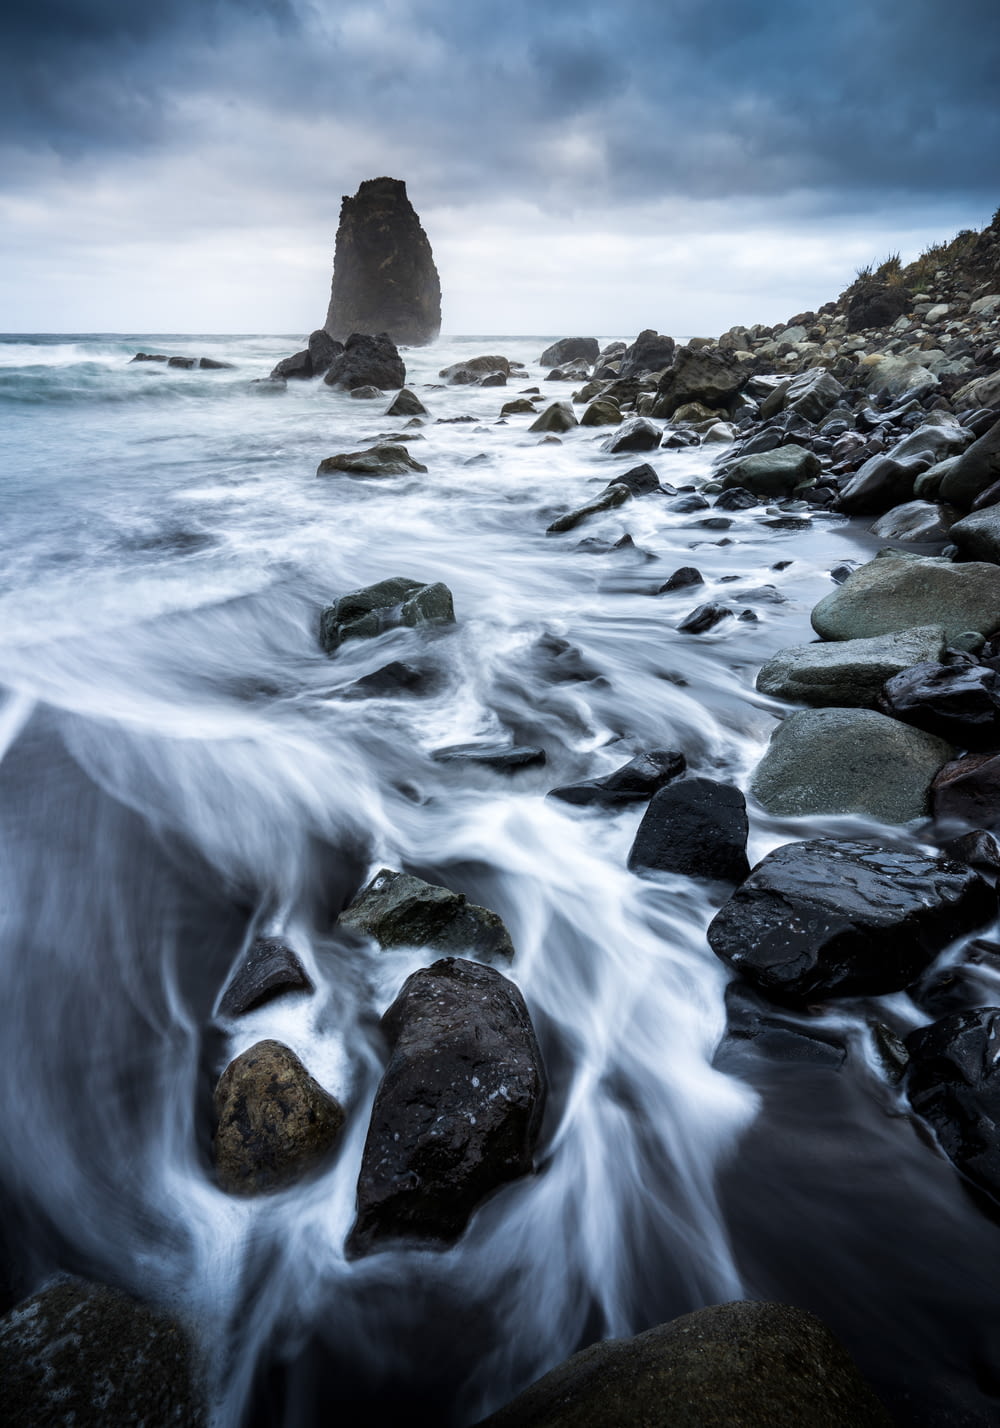 a long exposure photo of a rocky beach